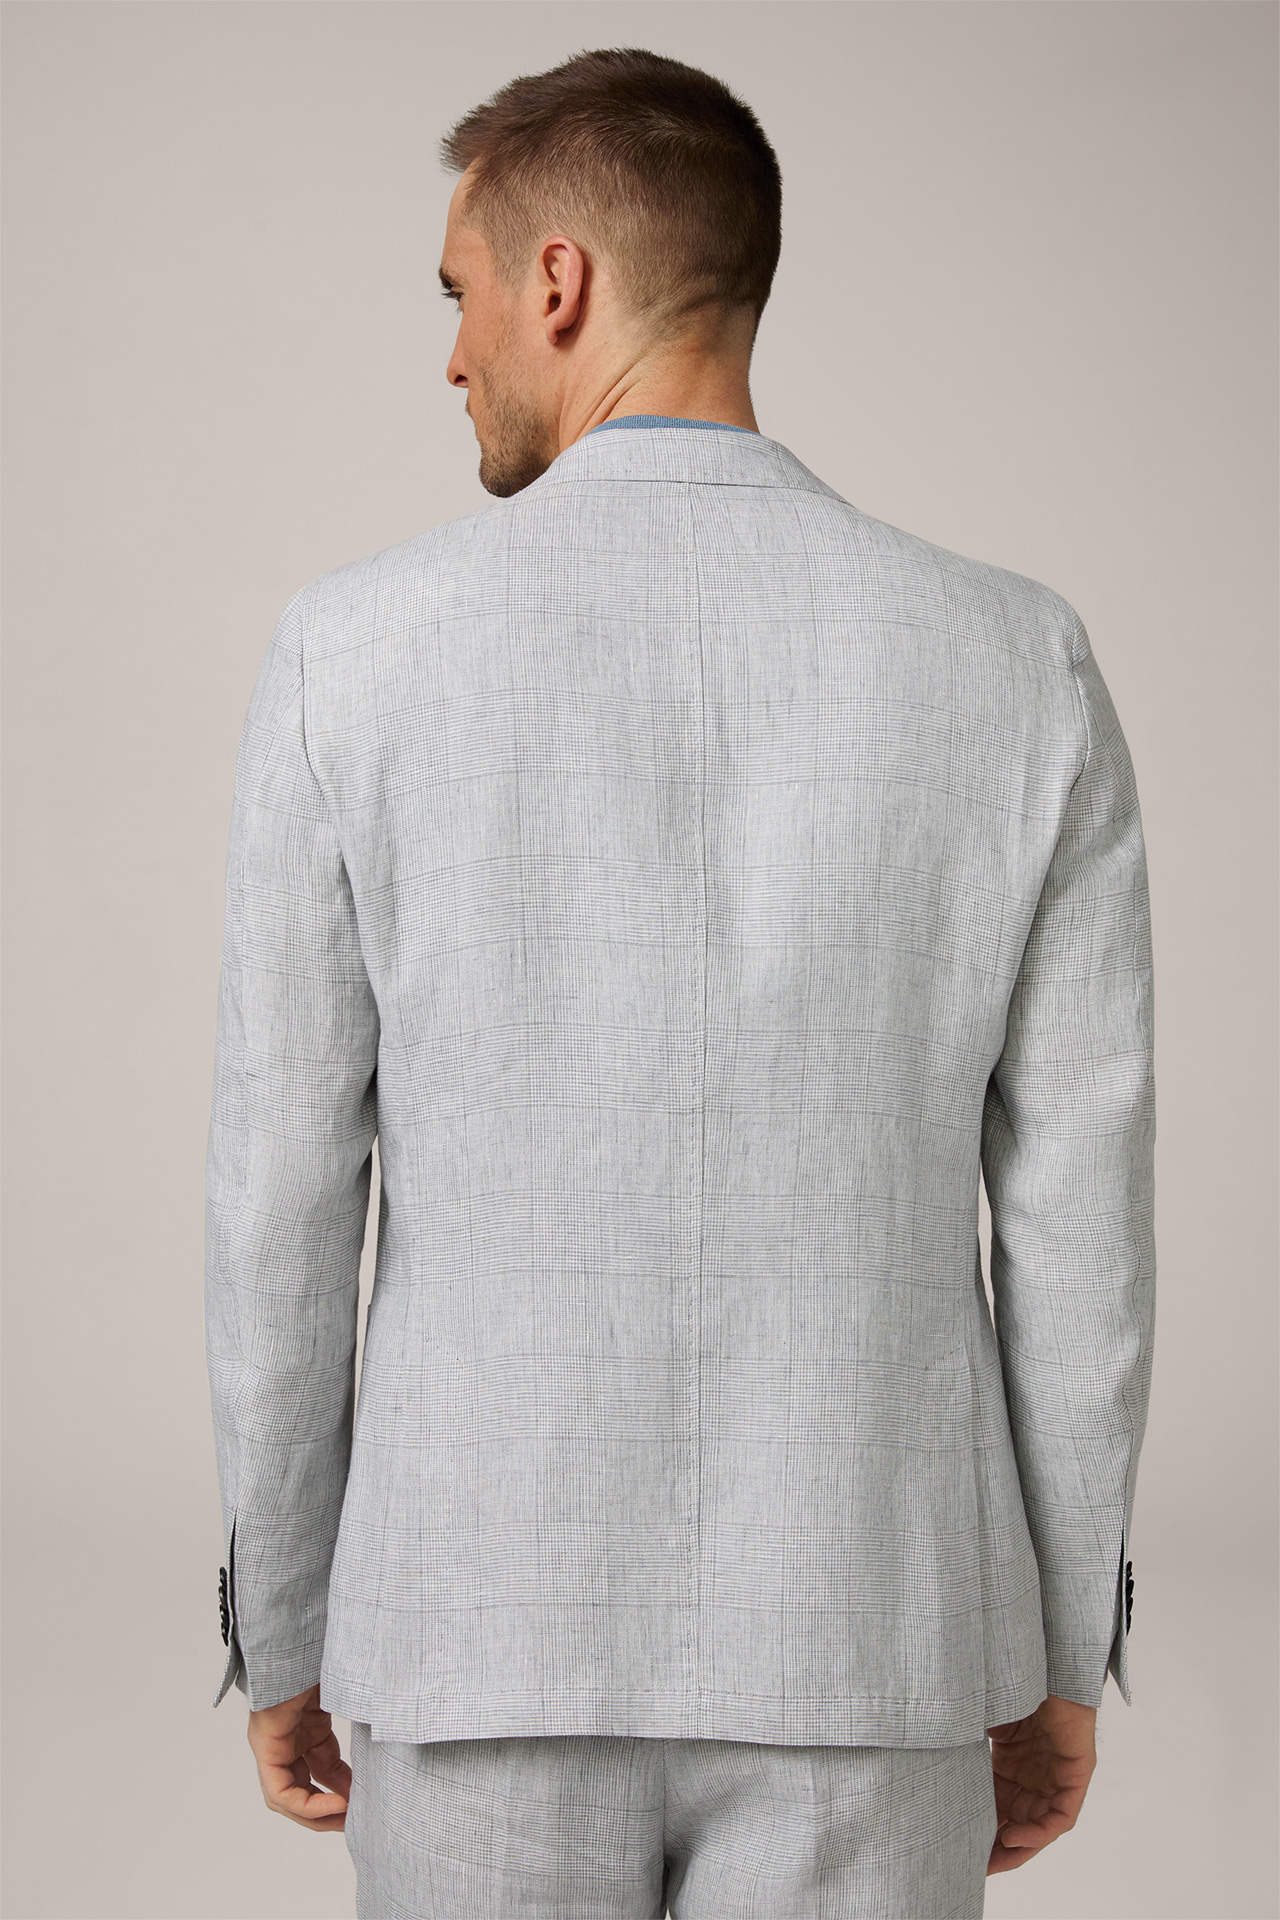 Giro Linen Modular Jacket in a Grey Pattern